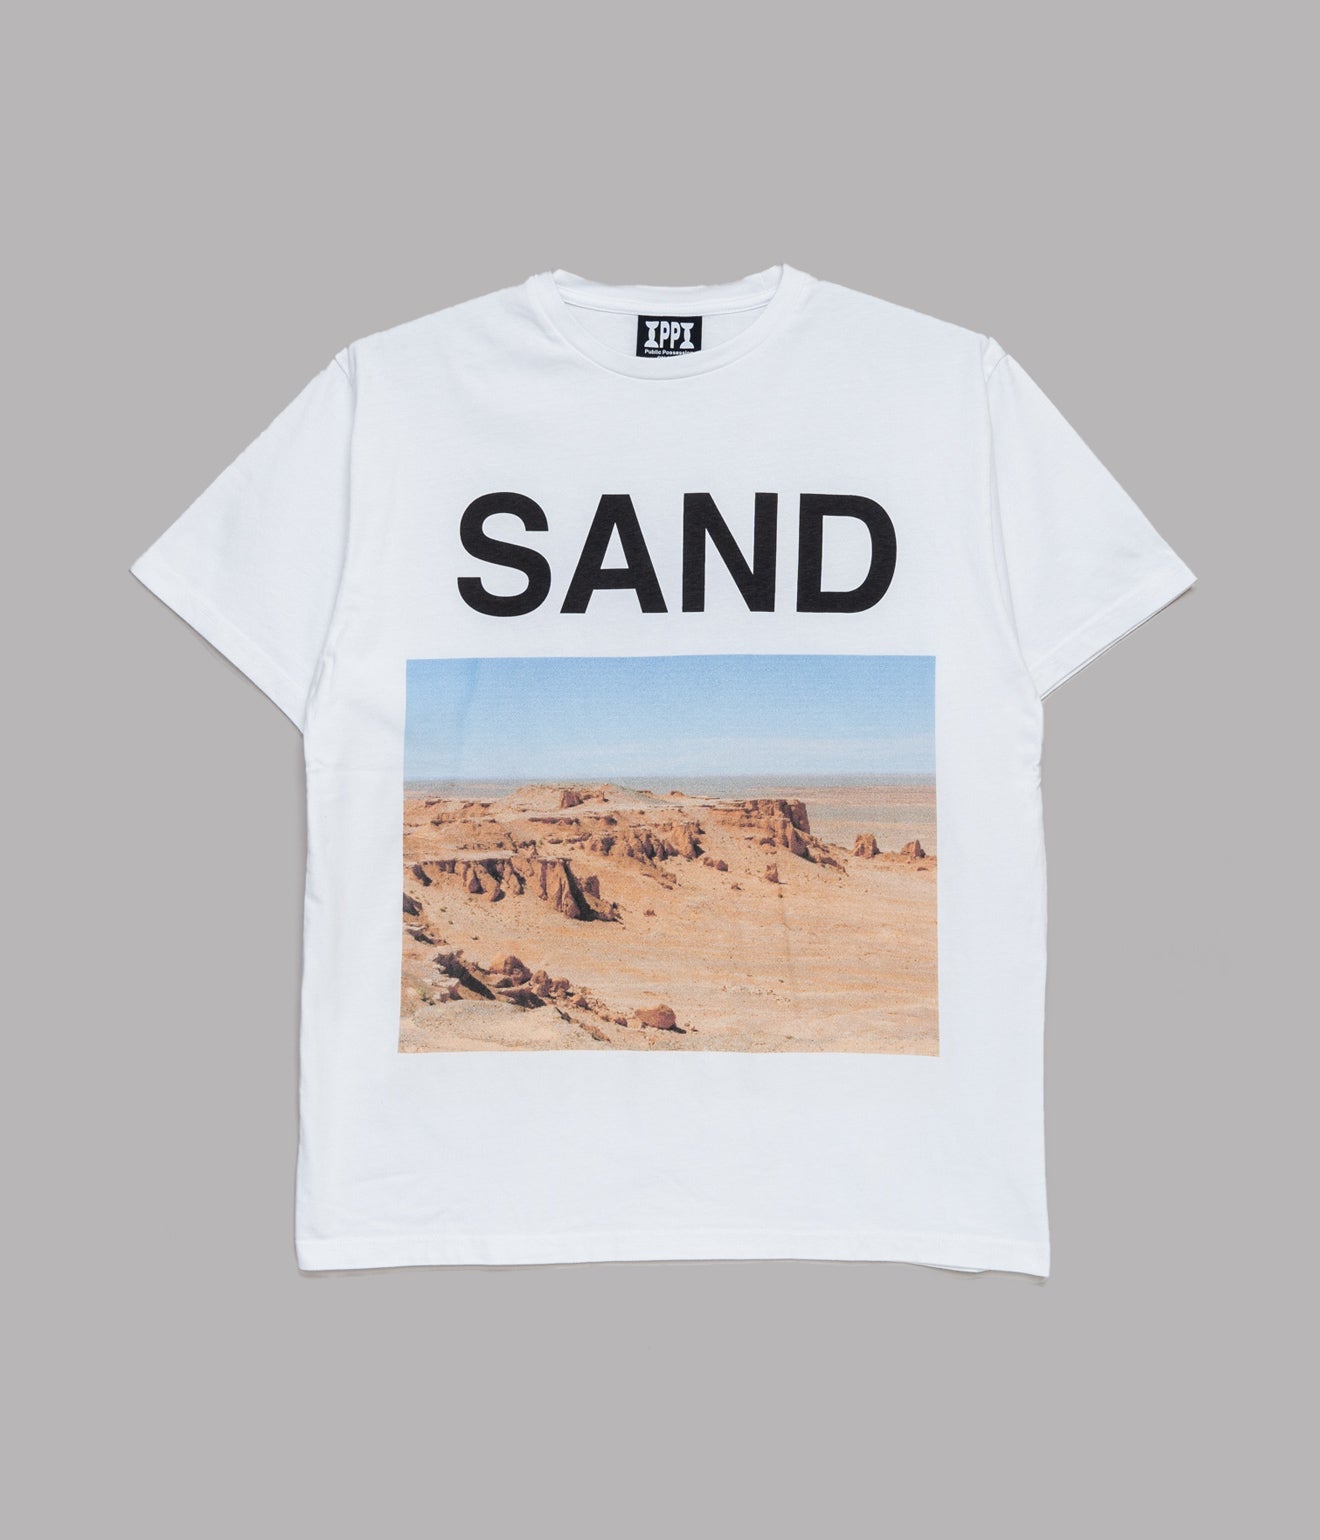 Public Possession "Sandwitch" T-Shirt - WEAREALLANIMALS